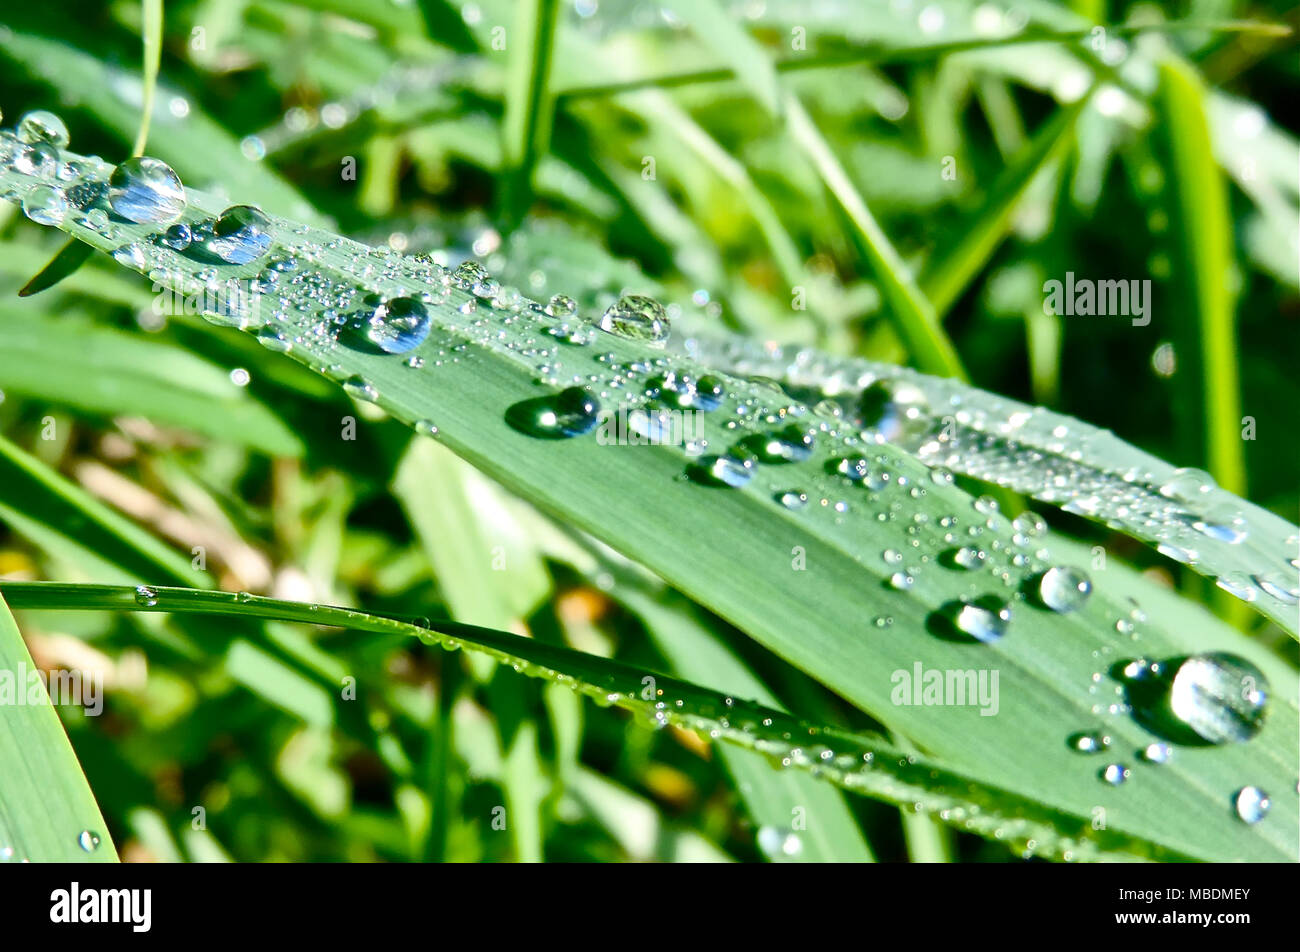 La pasto verde fondo con gotas de rocío o gotas de lluvia. Foto de stock